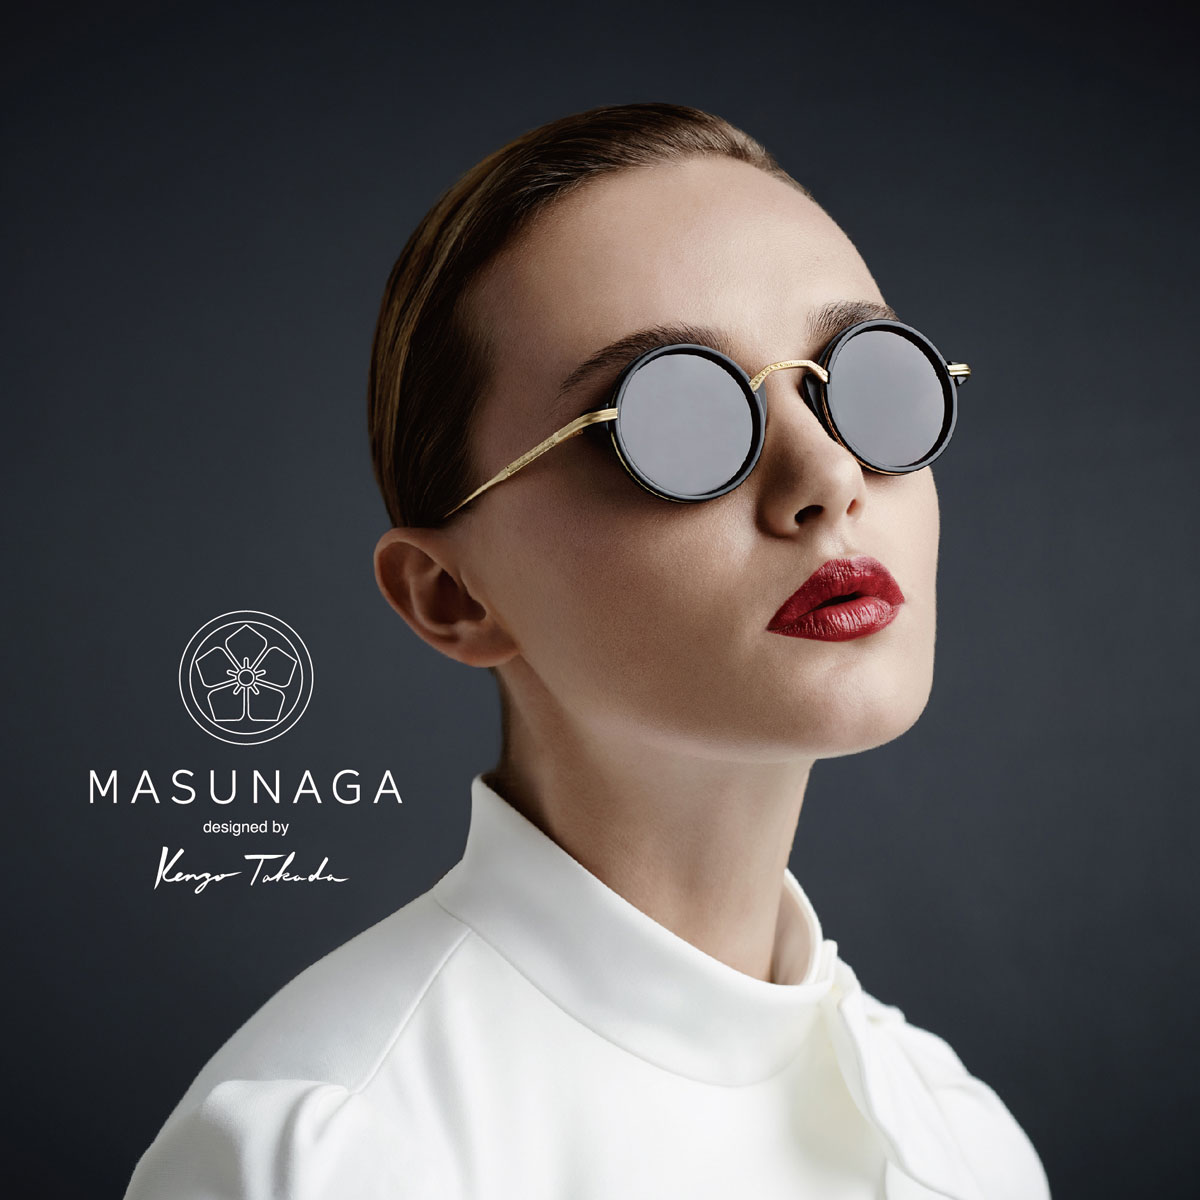 MASUNAGA designed by Kenzo Takada～増永眼鏡×高田賢三コラボサングラス発売 - サングラスニュース | メガネ